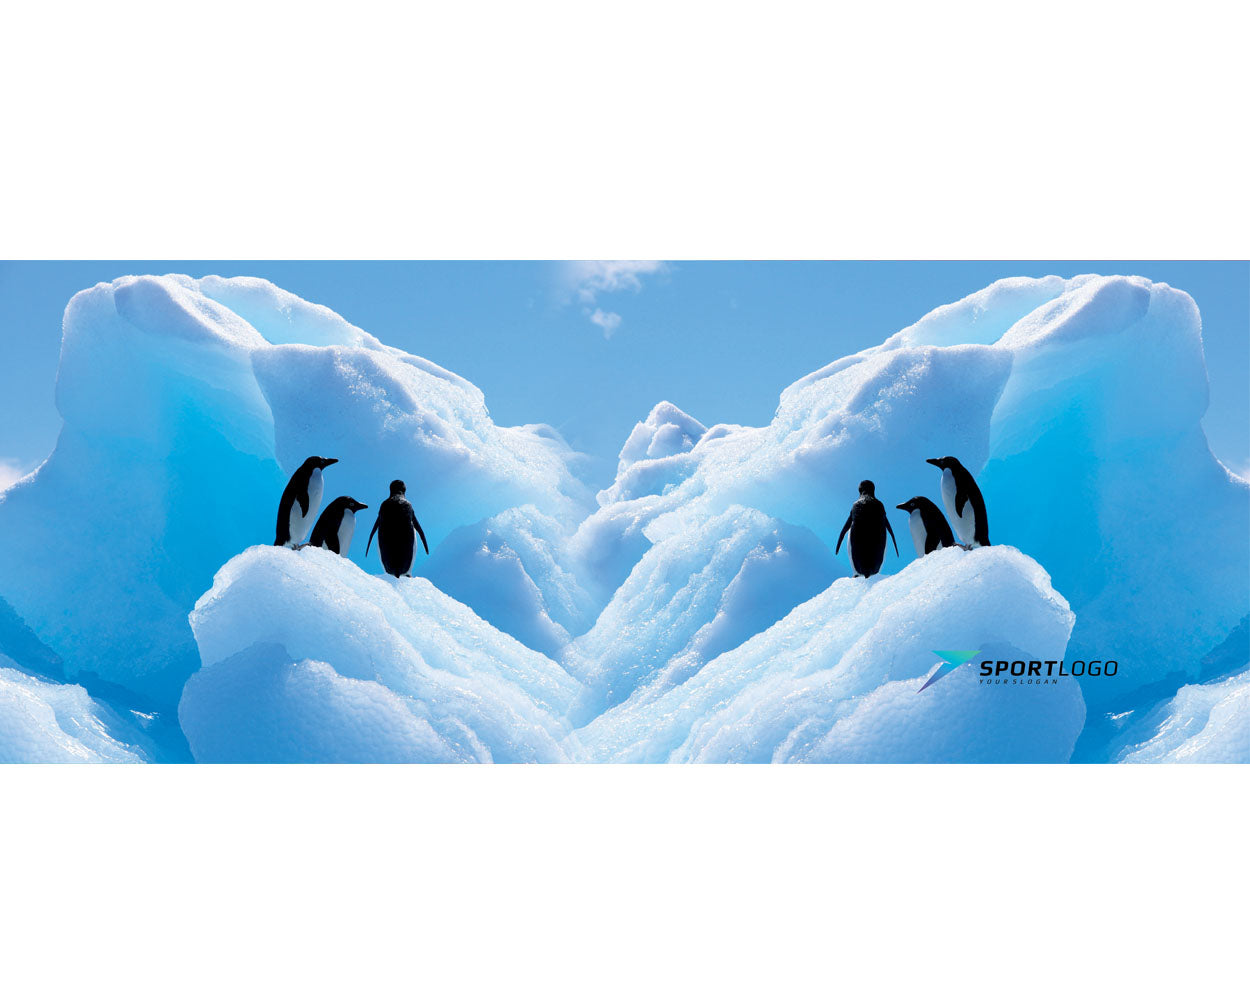 Penguin Cooling Towel (SIZE 12"X 31")